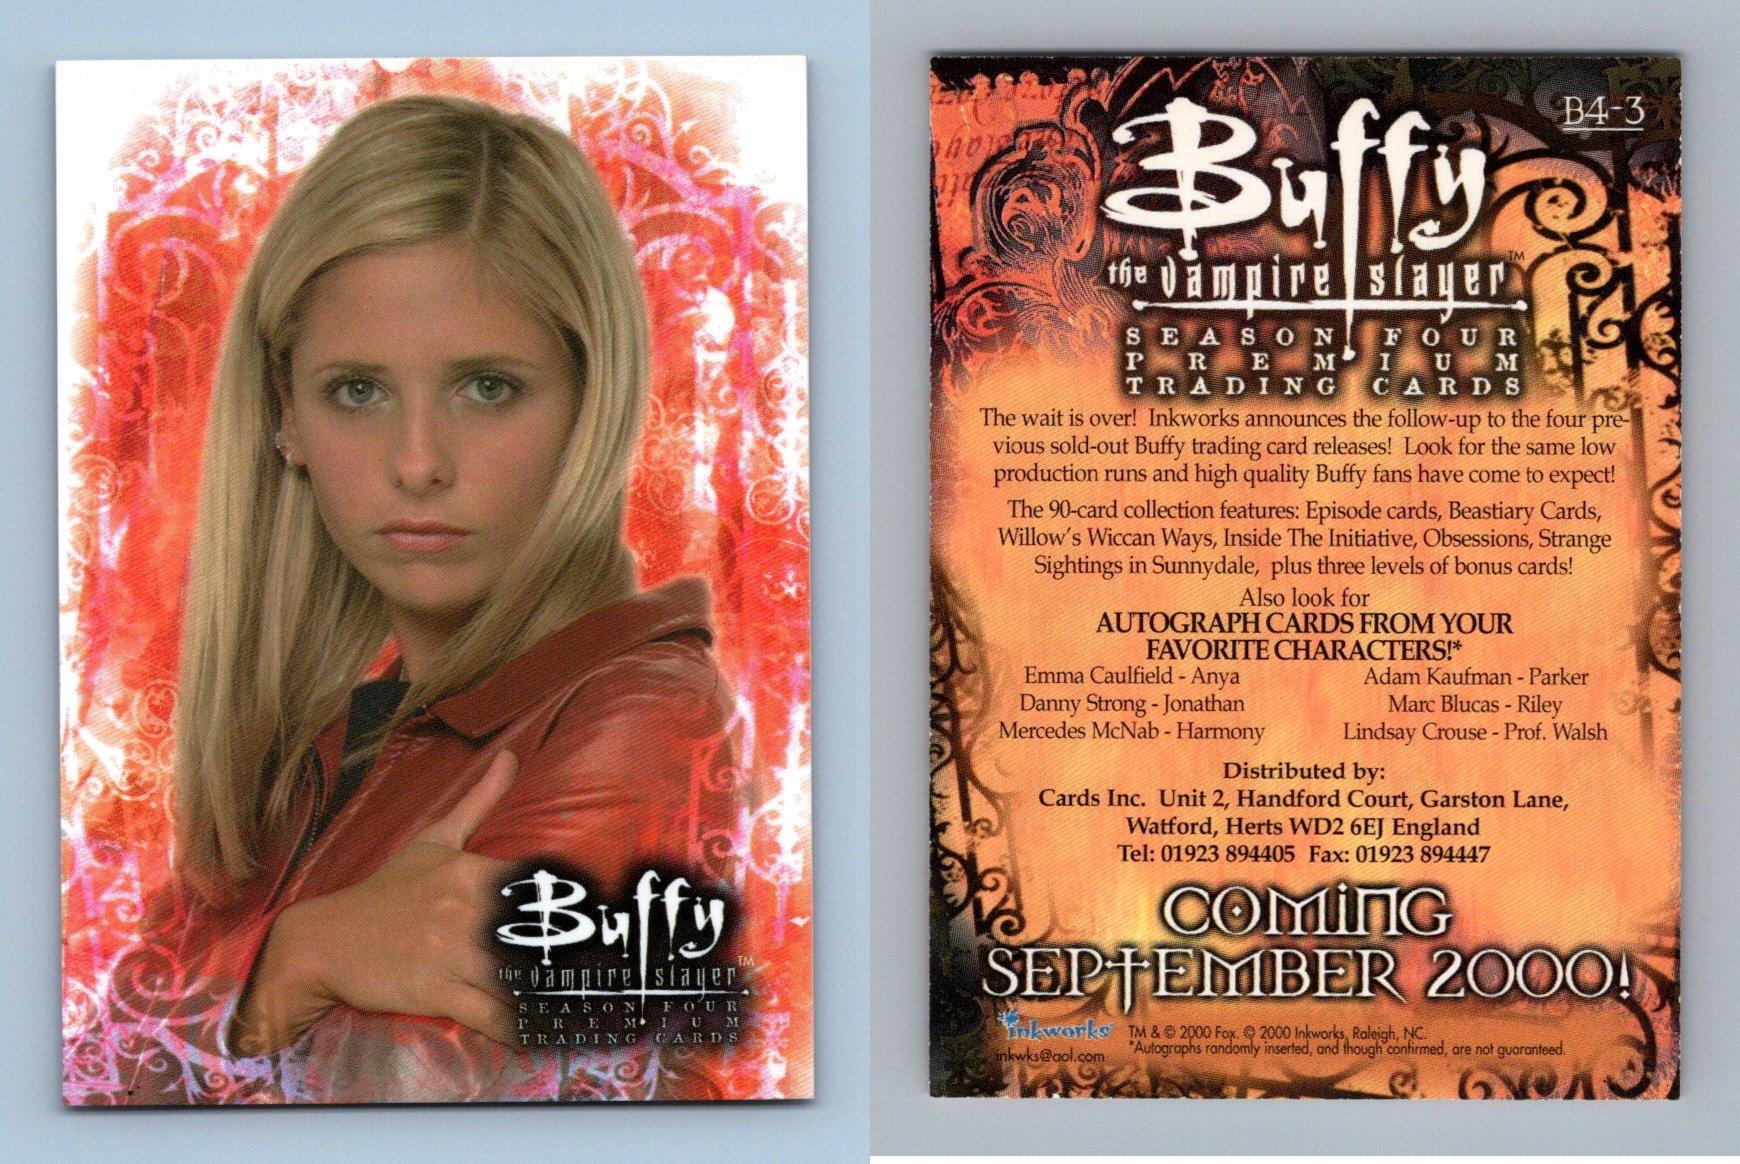 Buffy The Vampire Slayer Trading Cards Season 4 Inkworks 2000 Promo Card B4-3 